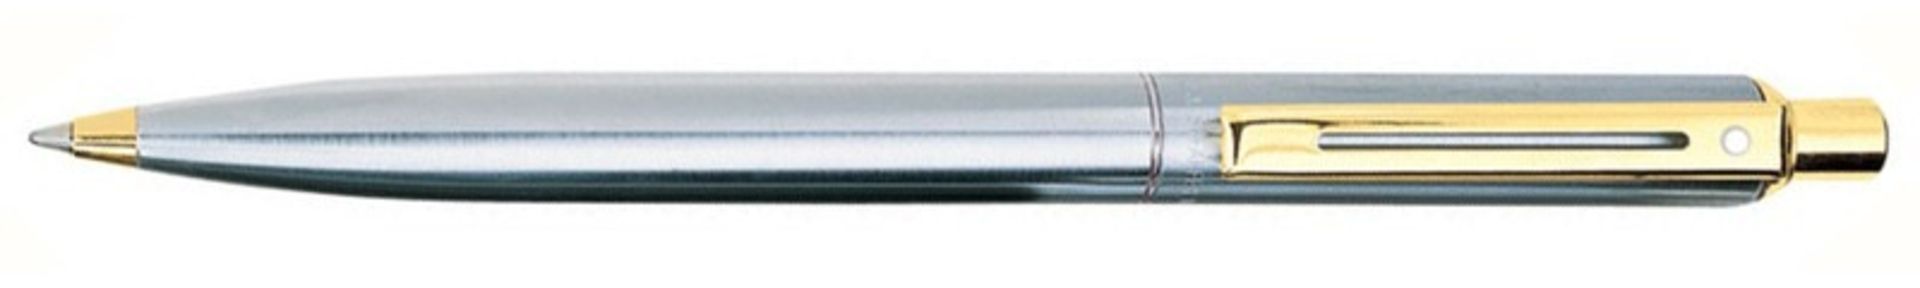 V Brand New Sheaffer Sentinel Brushed Chrome With Gold Tone Trim Ball Point Pen (Similar Pen ISP £